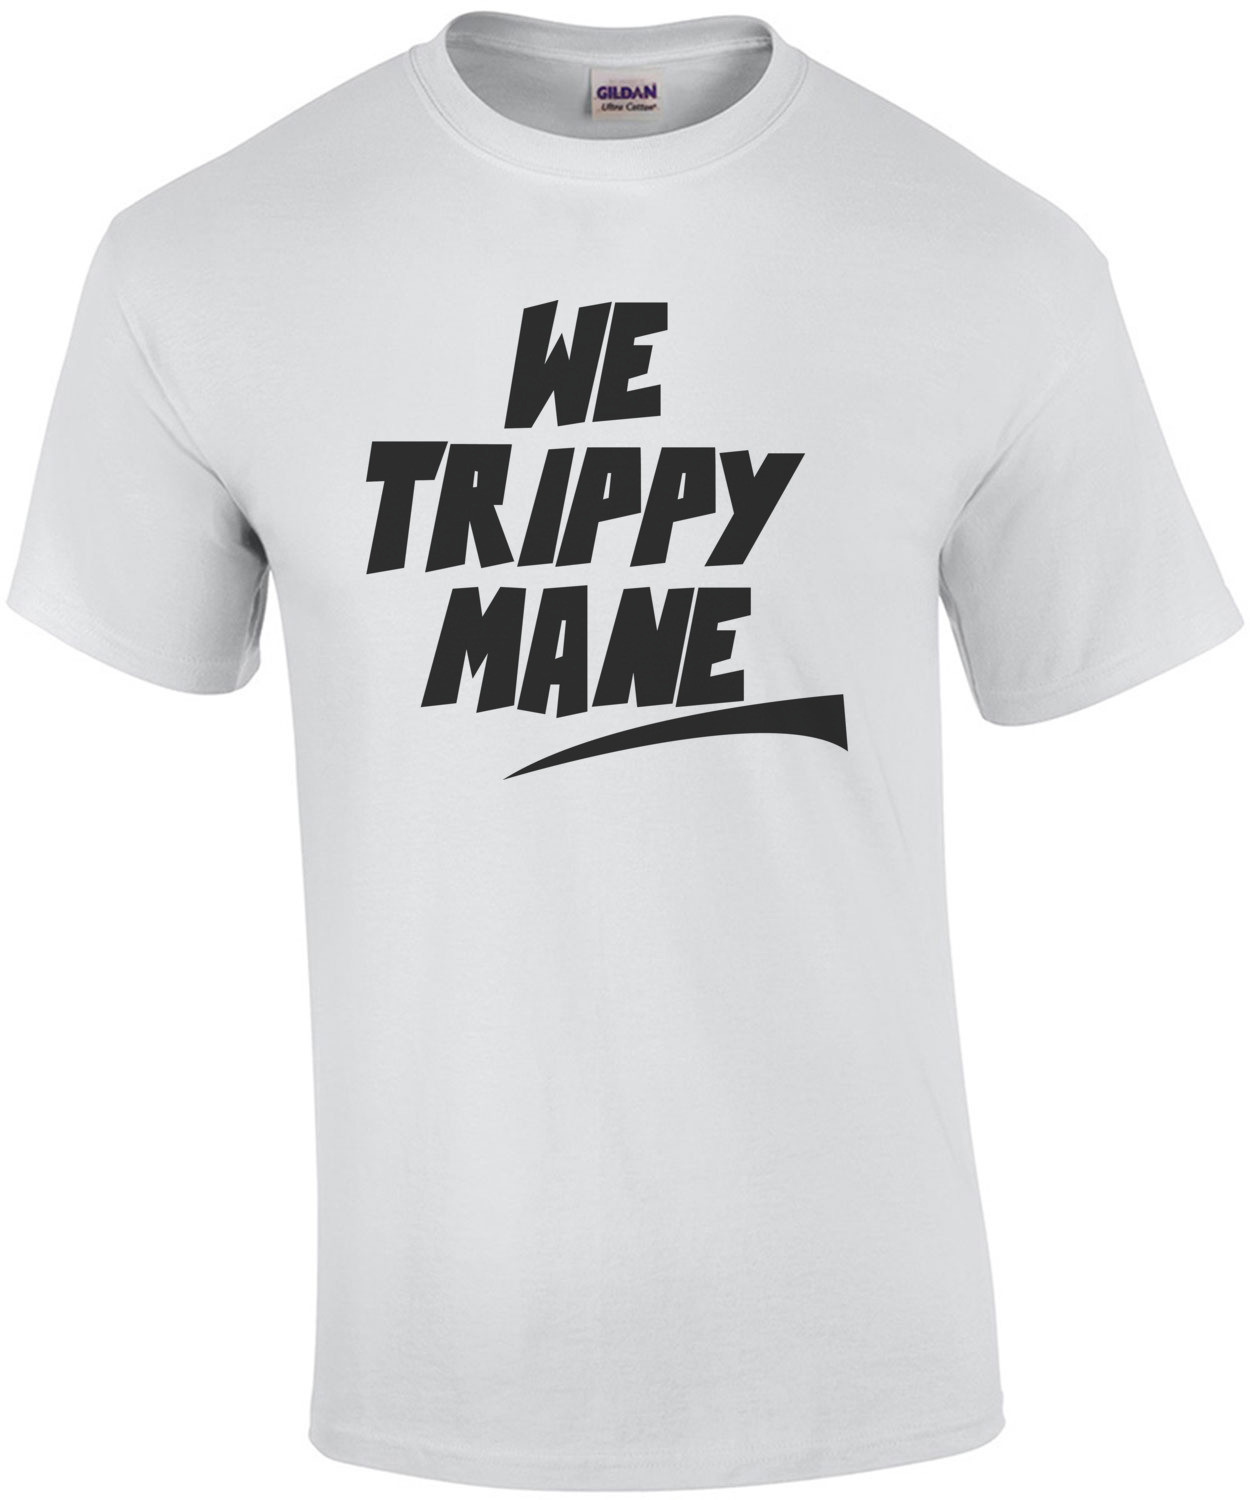 We trippy mane - juicy j t-shirt